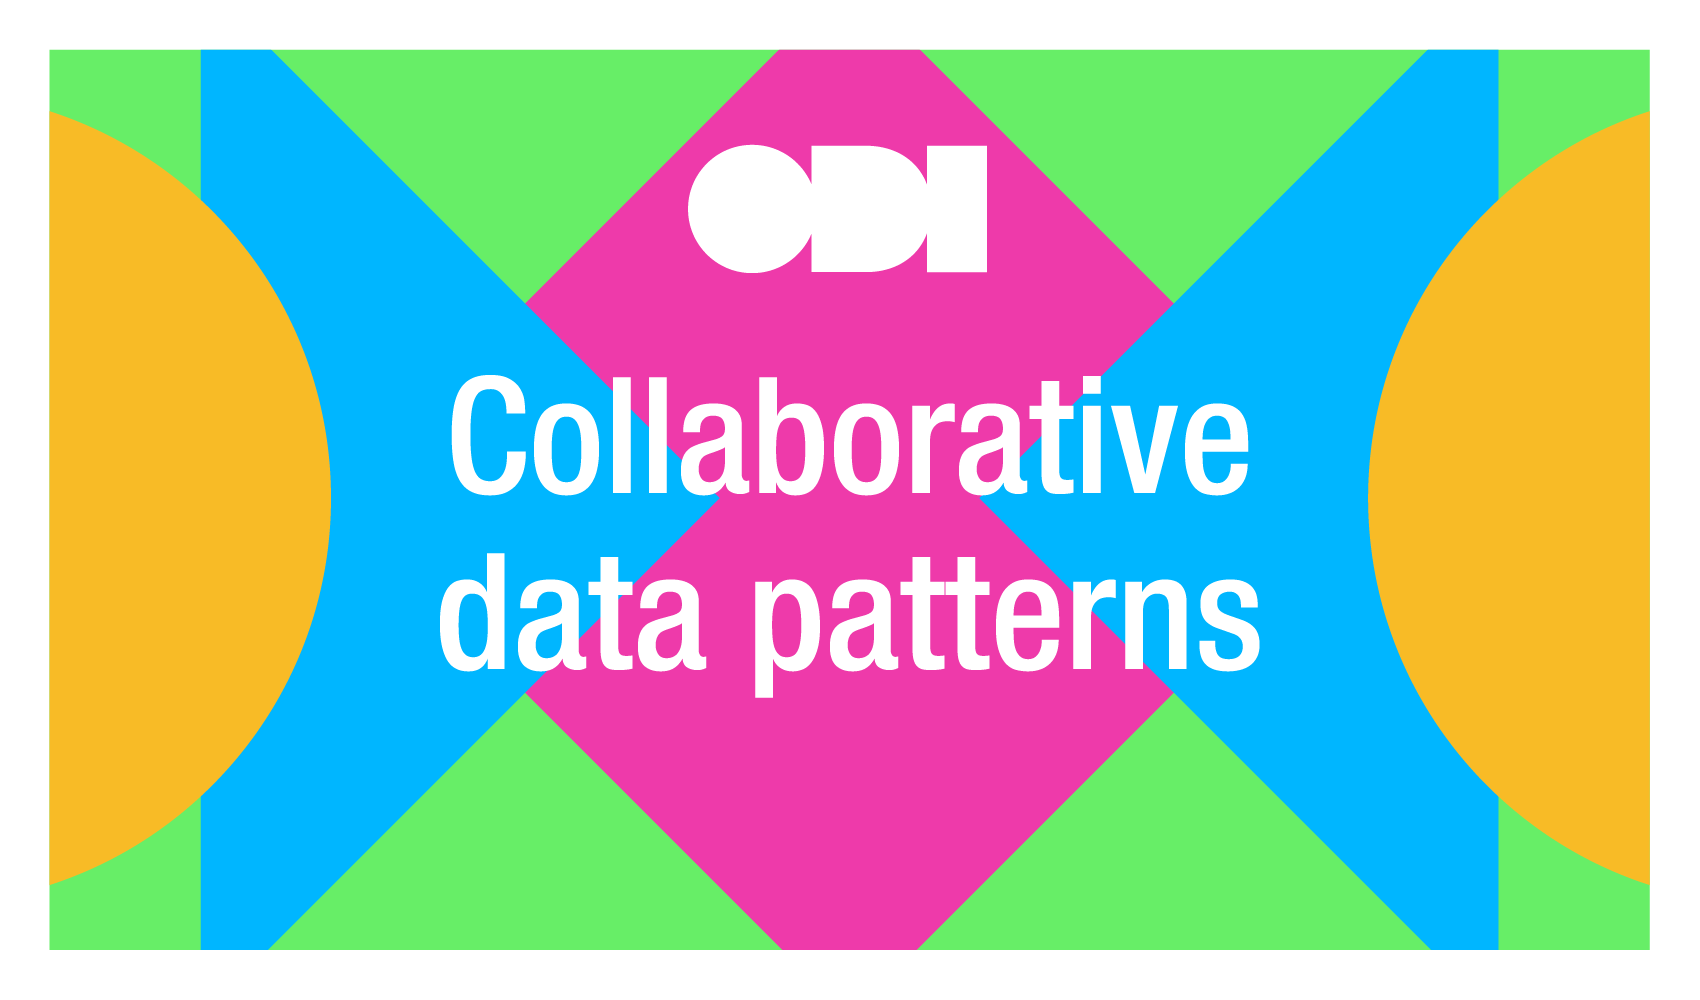 Data pattern. Be collaborative. Connecticut data collaborative.